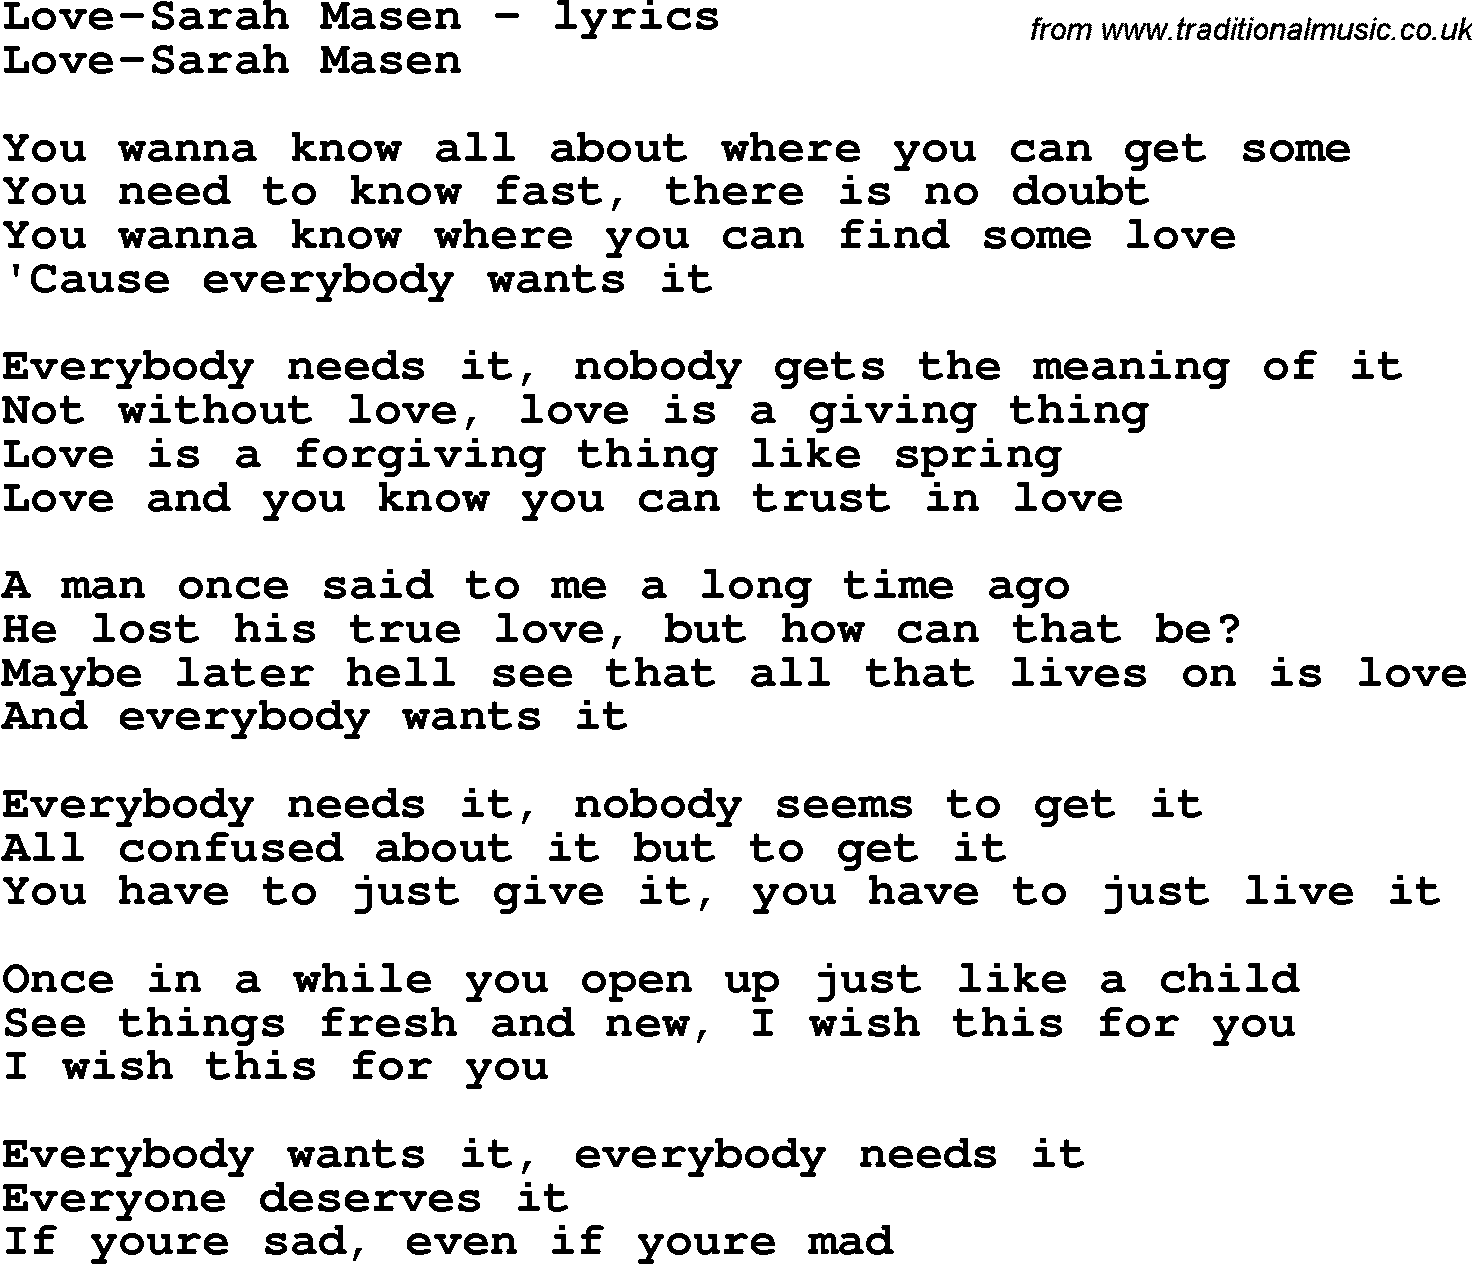 Love Song Lyrics for: Love-Sarah Masen